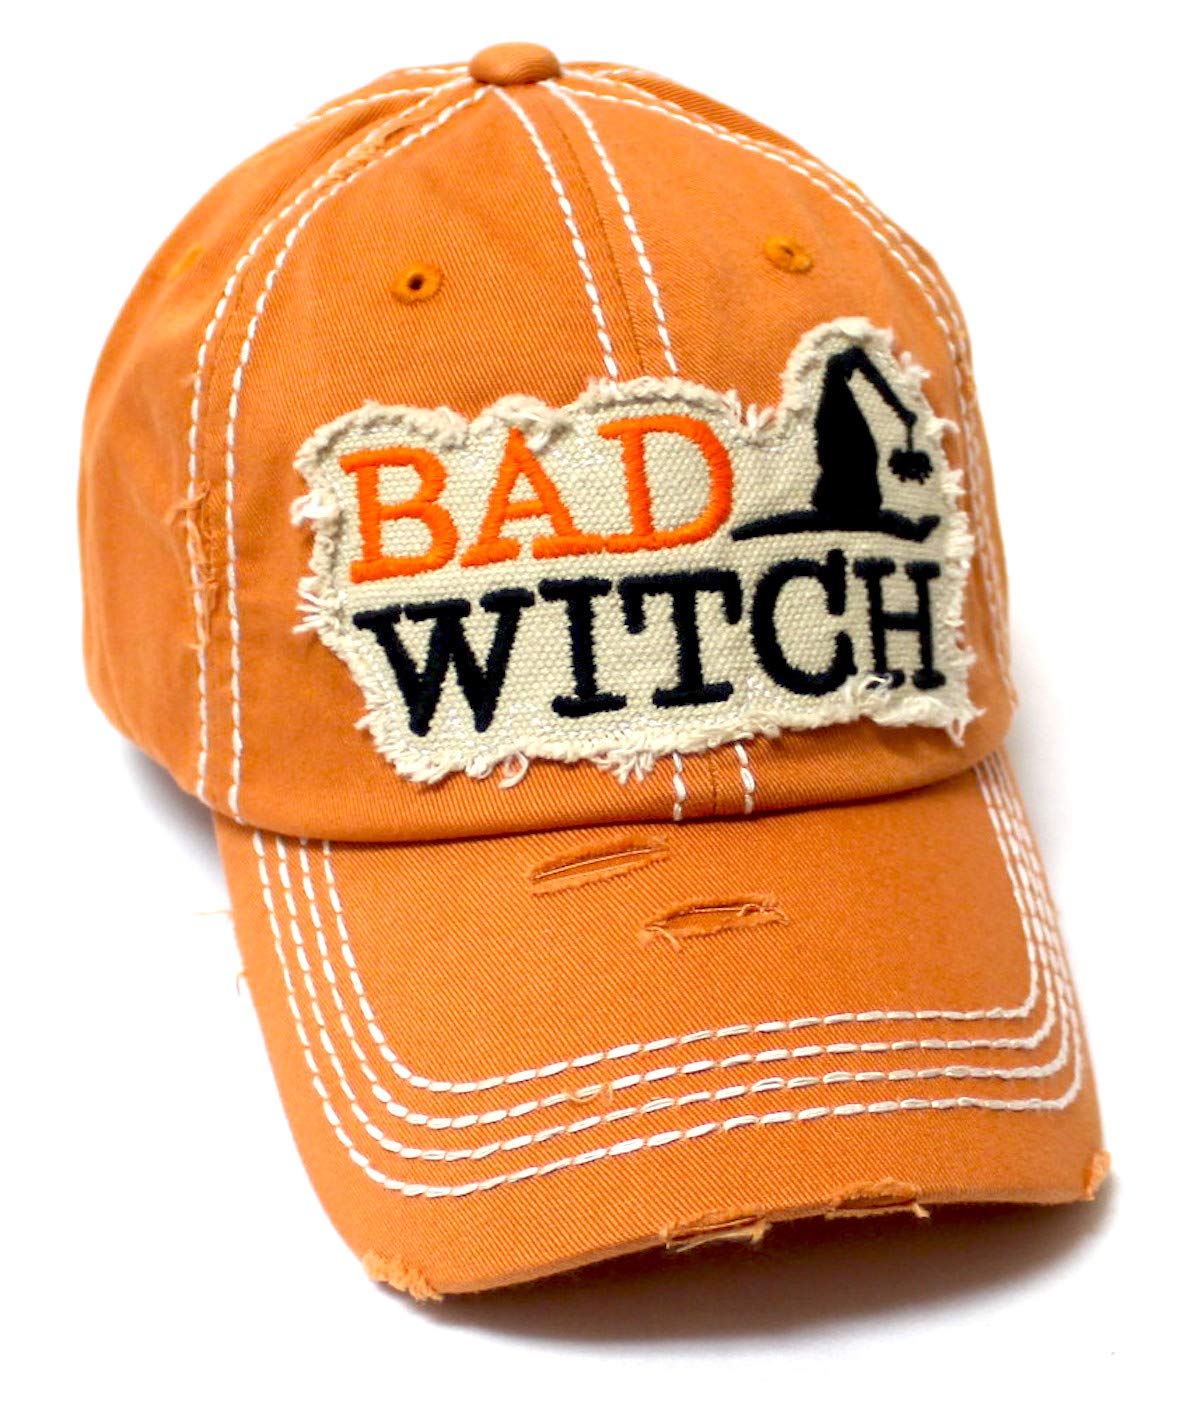 Women's Vintage Baseball Cap Bad Witch Halloween Spirit Patch Embroidery Hat, Pumpkin Spice Latte